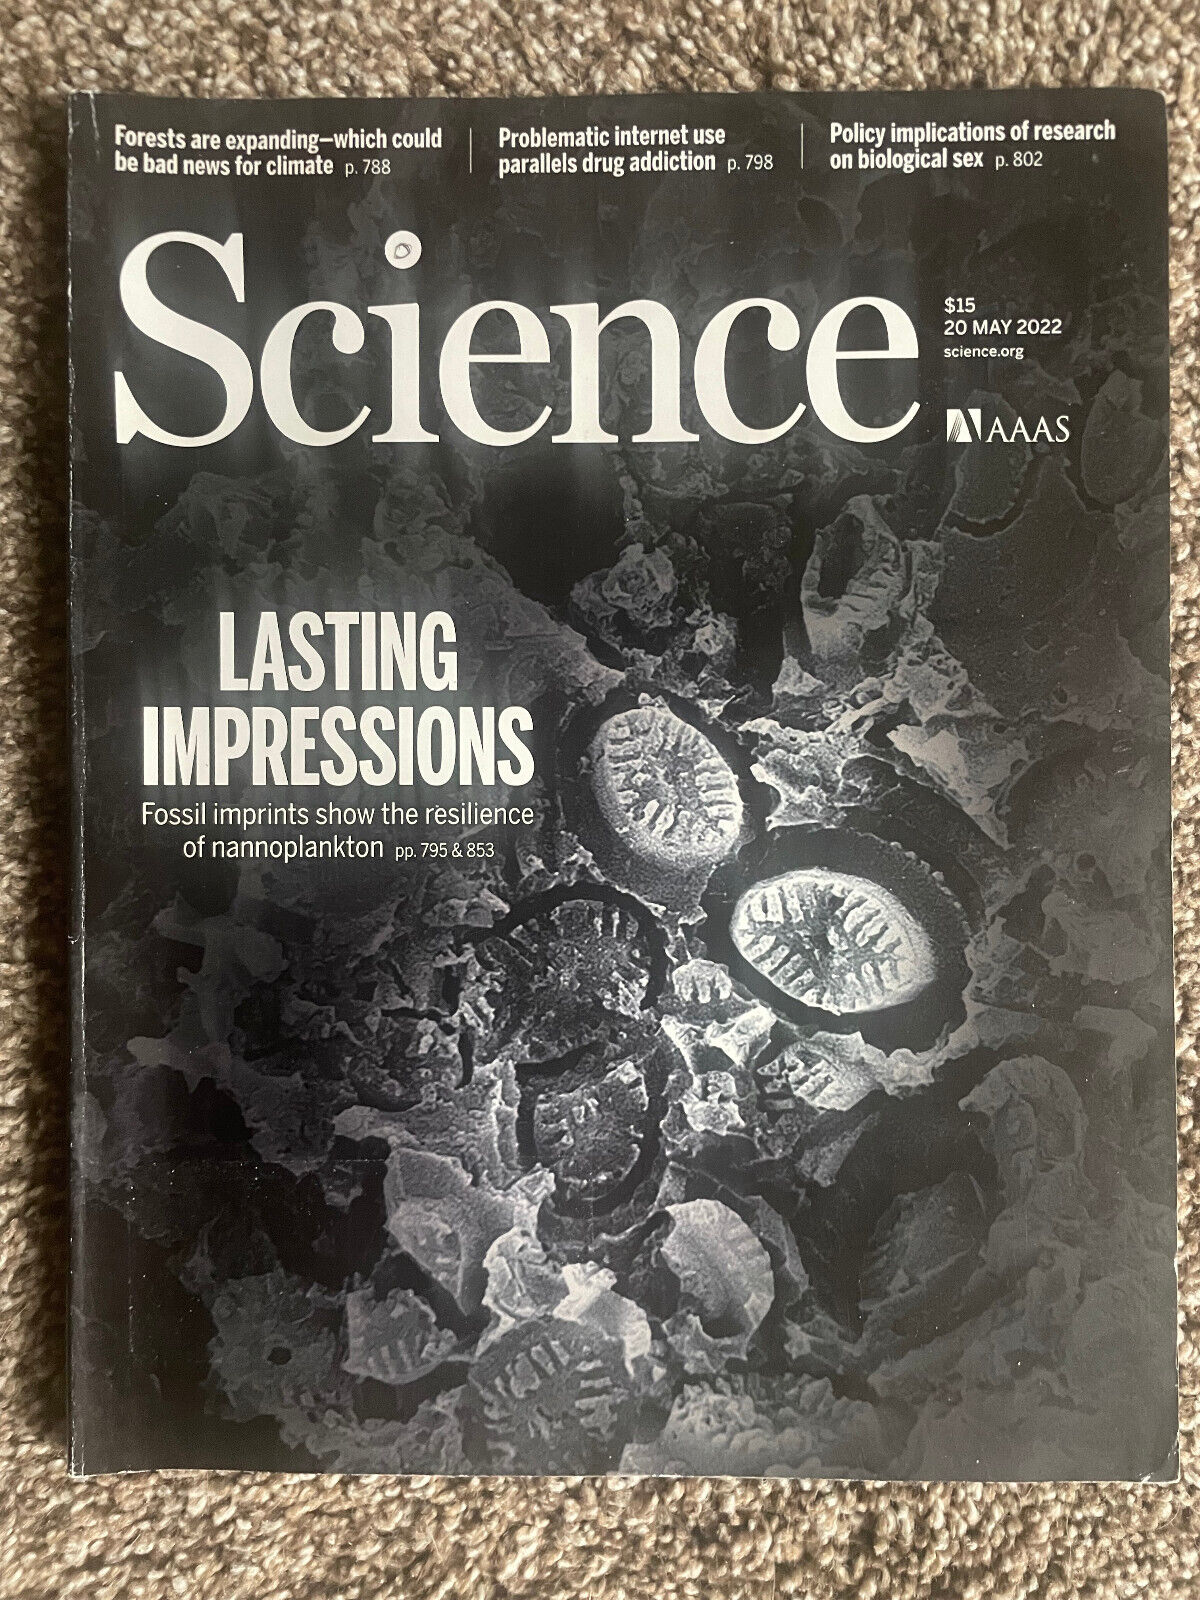 SCIENCE Magazine May 20 2022 Fossil Imprints Nannoplankton Internet Addiction